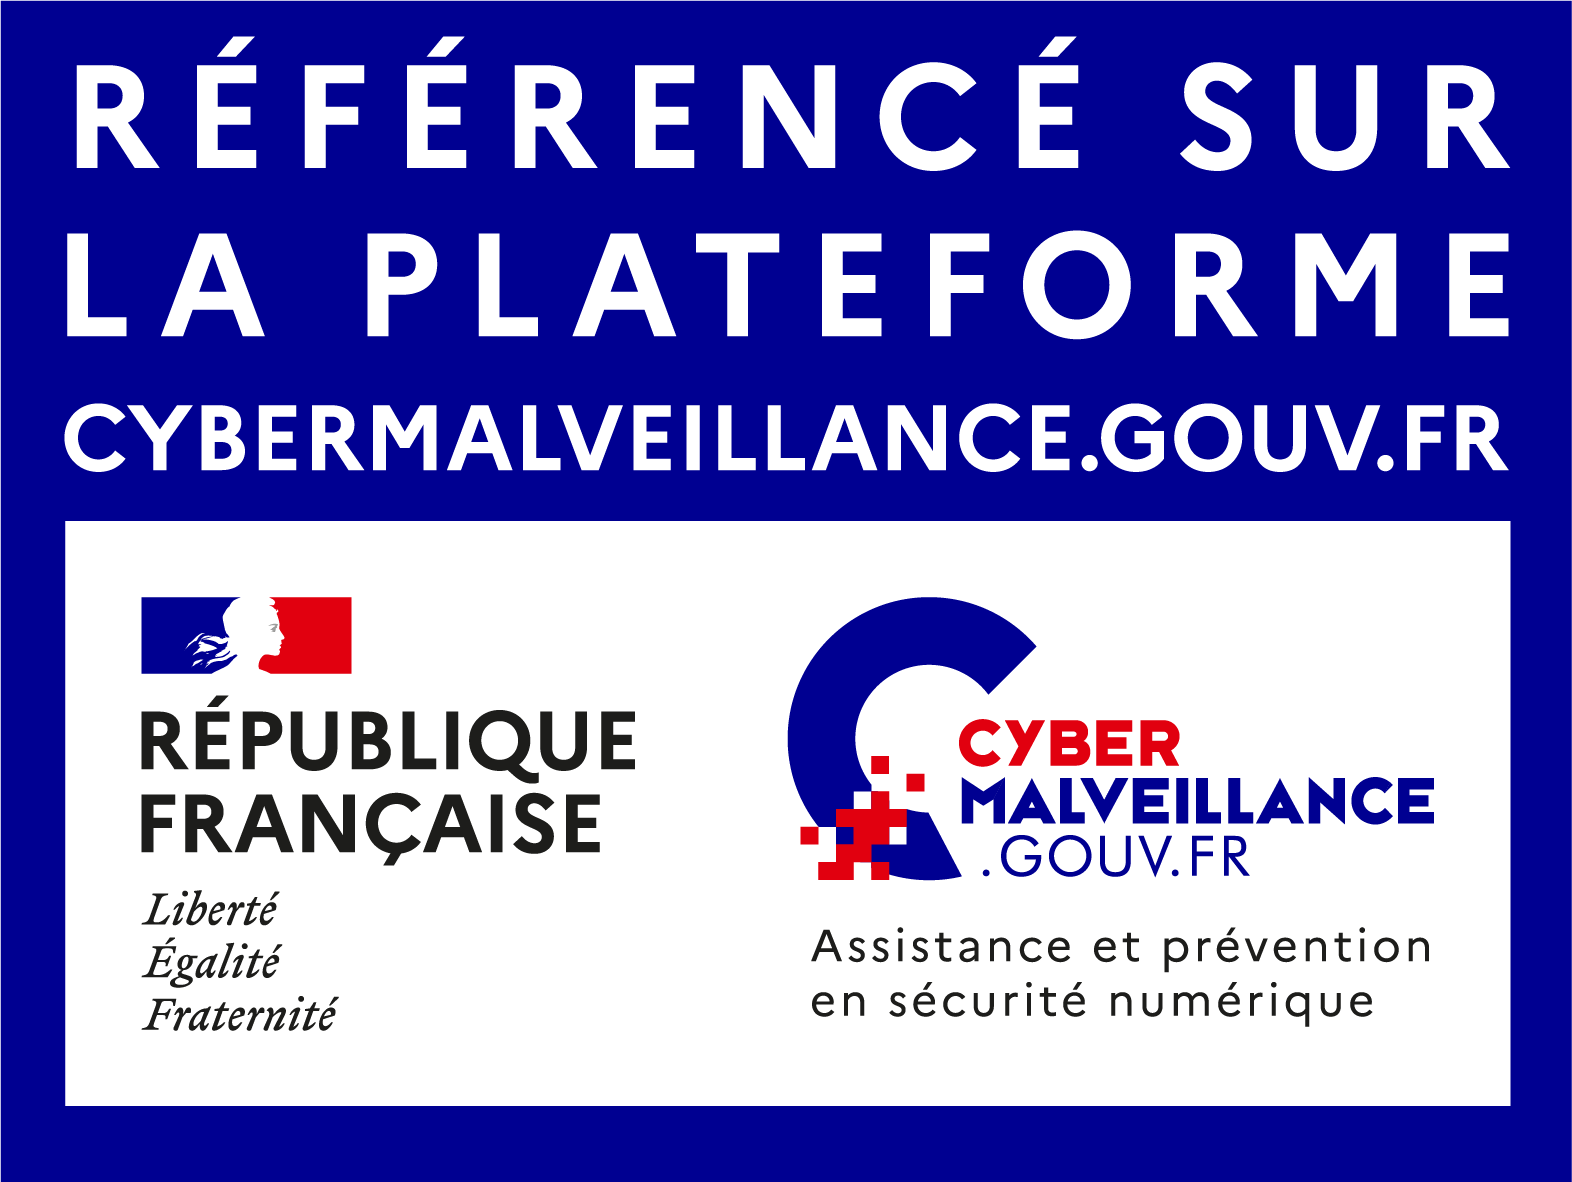 Professional referenced on cybermalveillance.gouv.fr